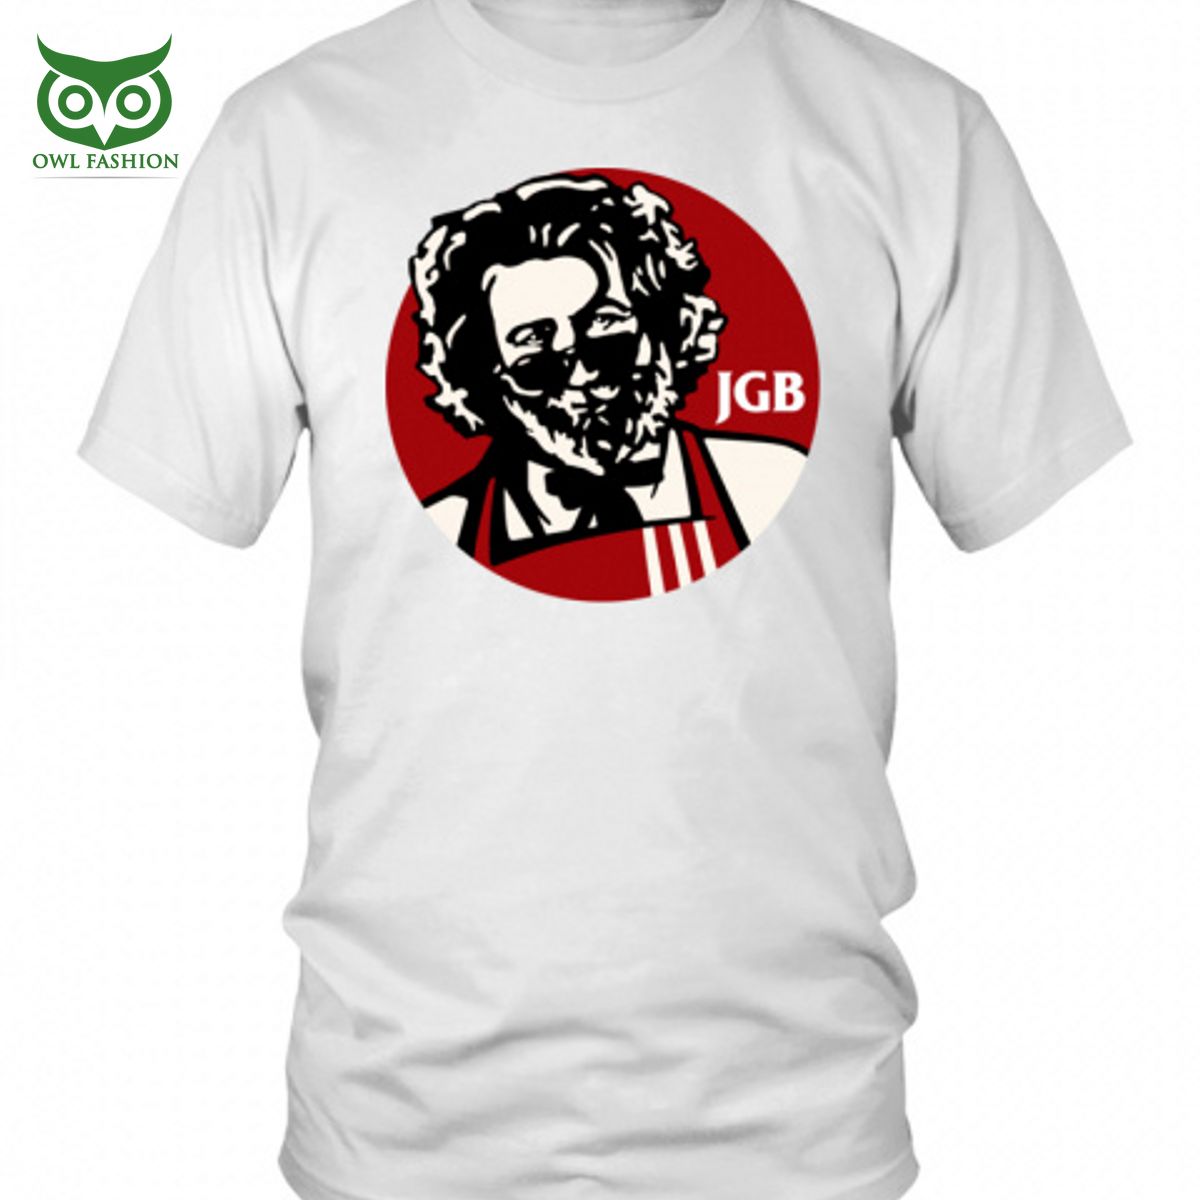 jgb american rock kfc 2d t shirt 1 6Vt2C